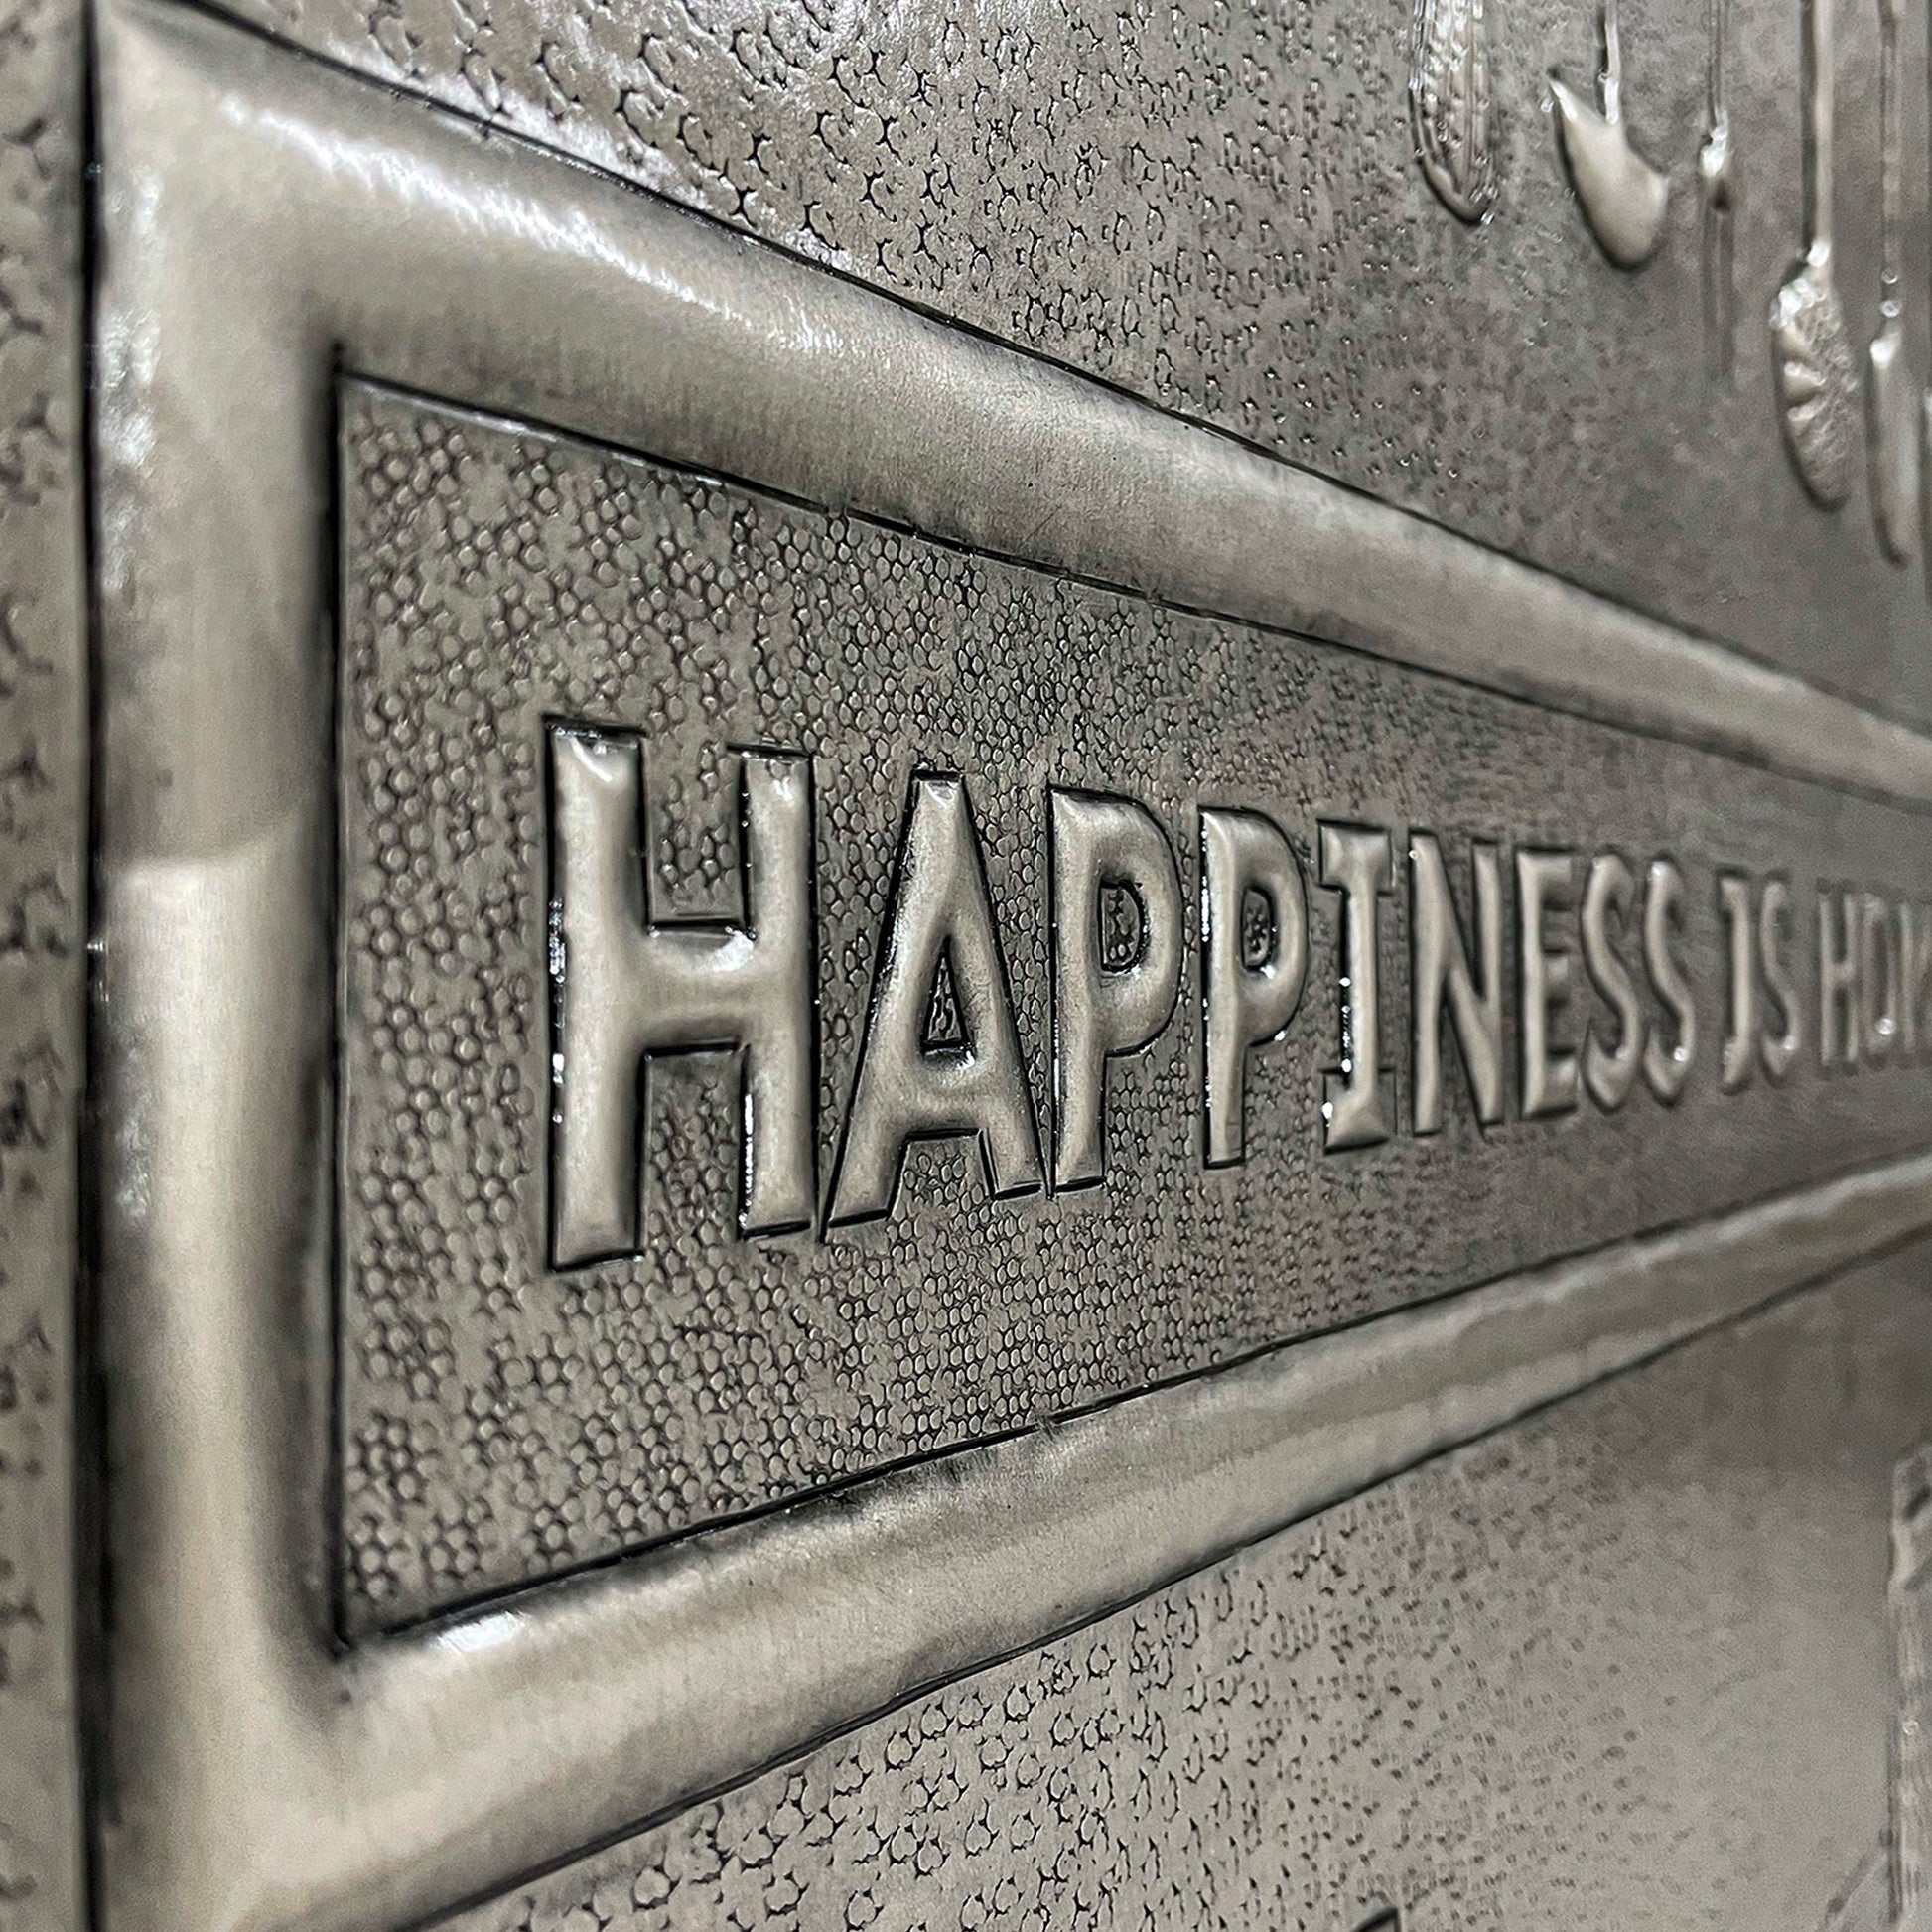 "Happiness is Homemade" Copper Kitchen Backsplash Tile